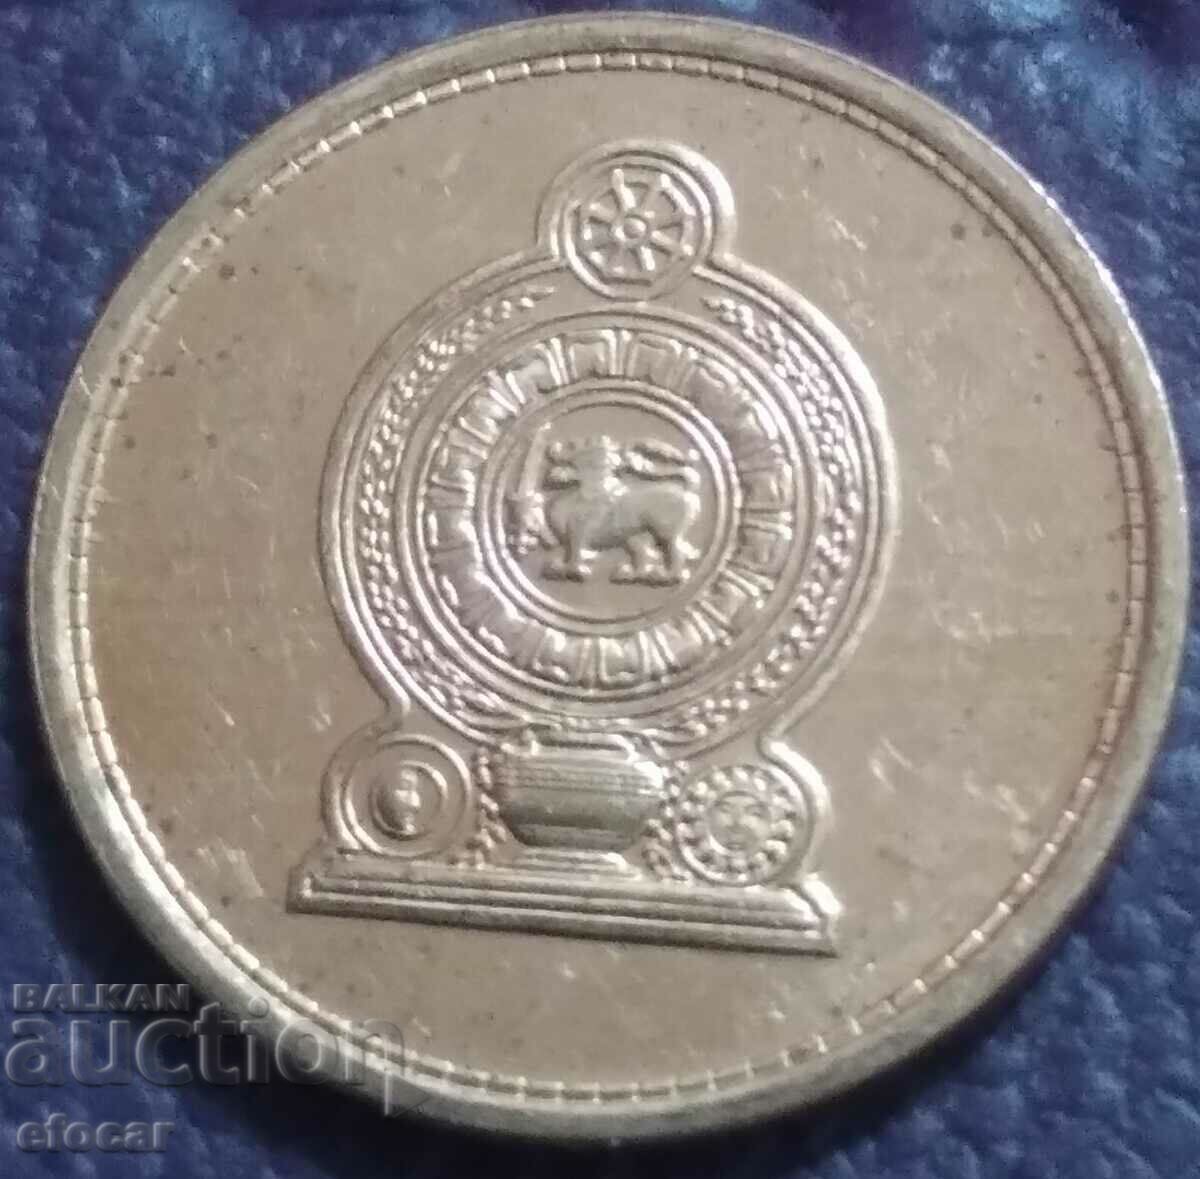 25 cents Sri Lanka 2009